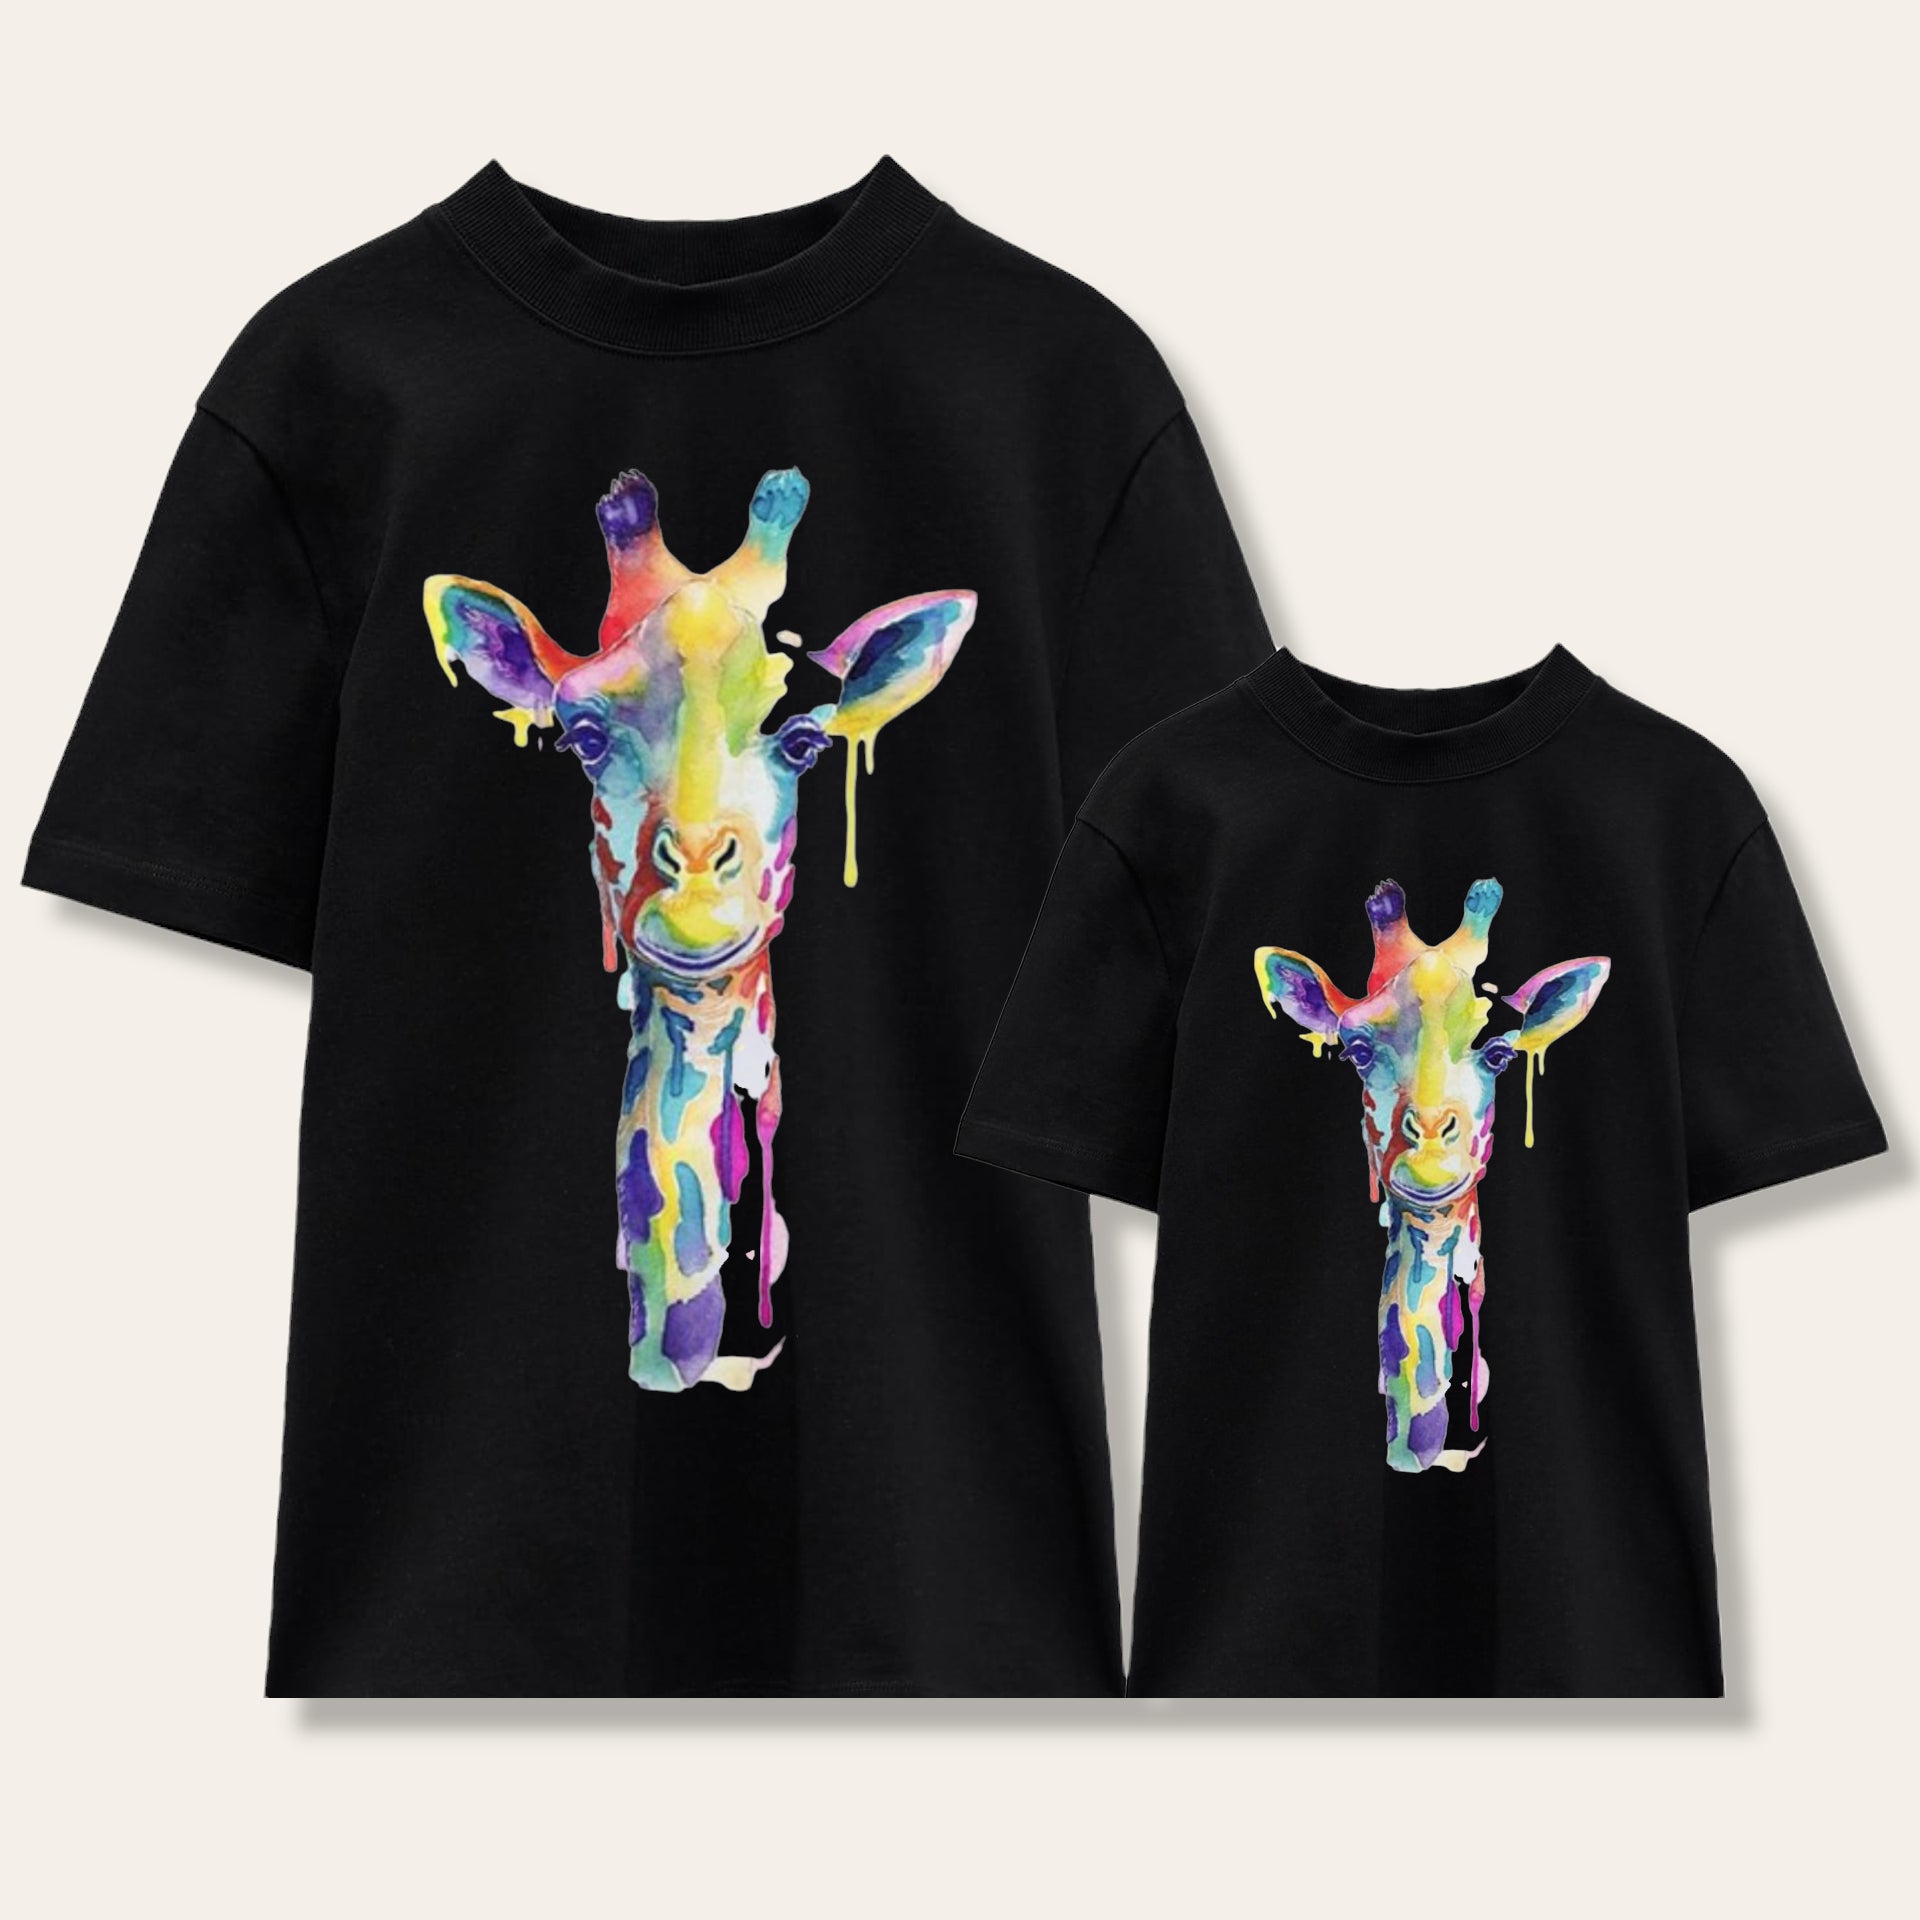 Girafe t-shirt